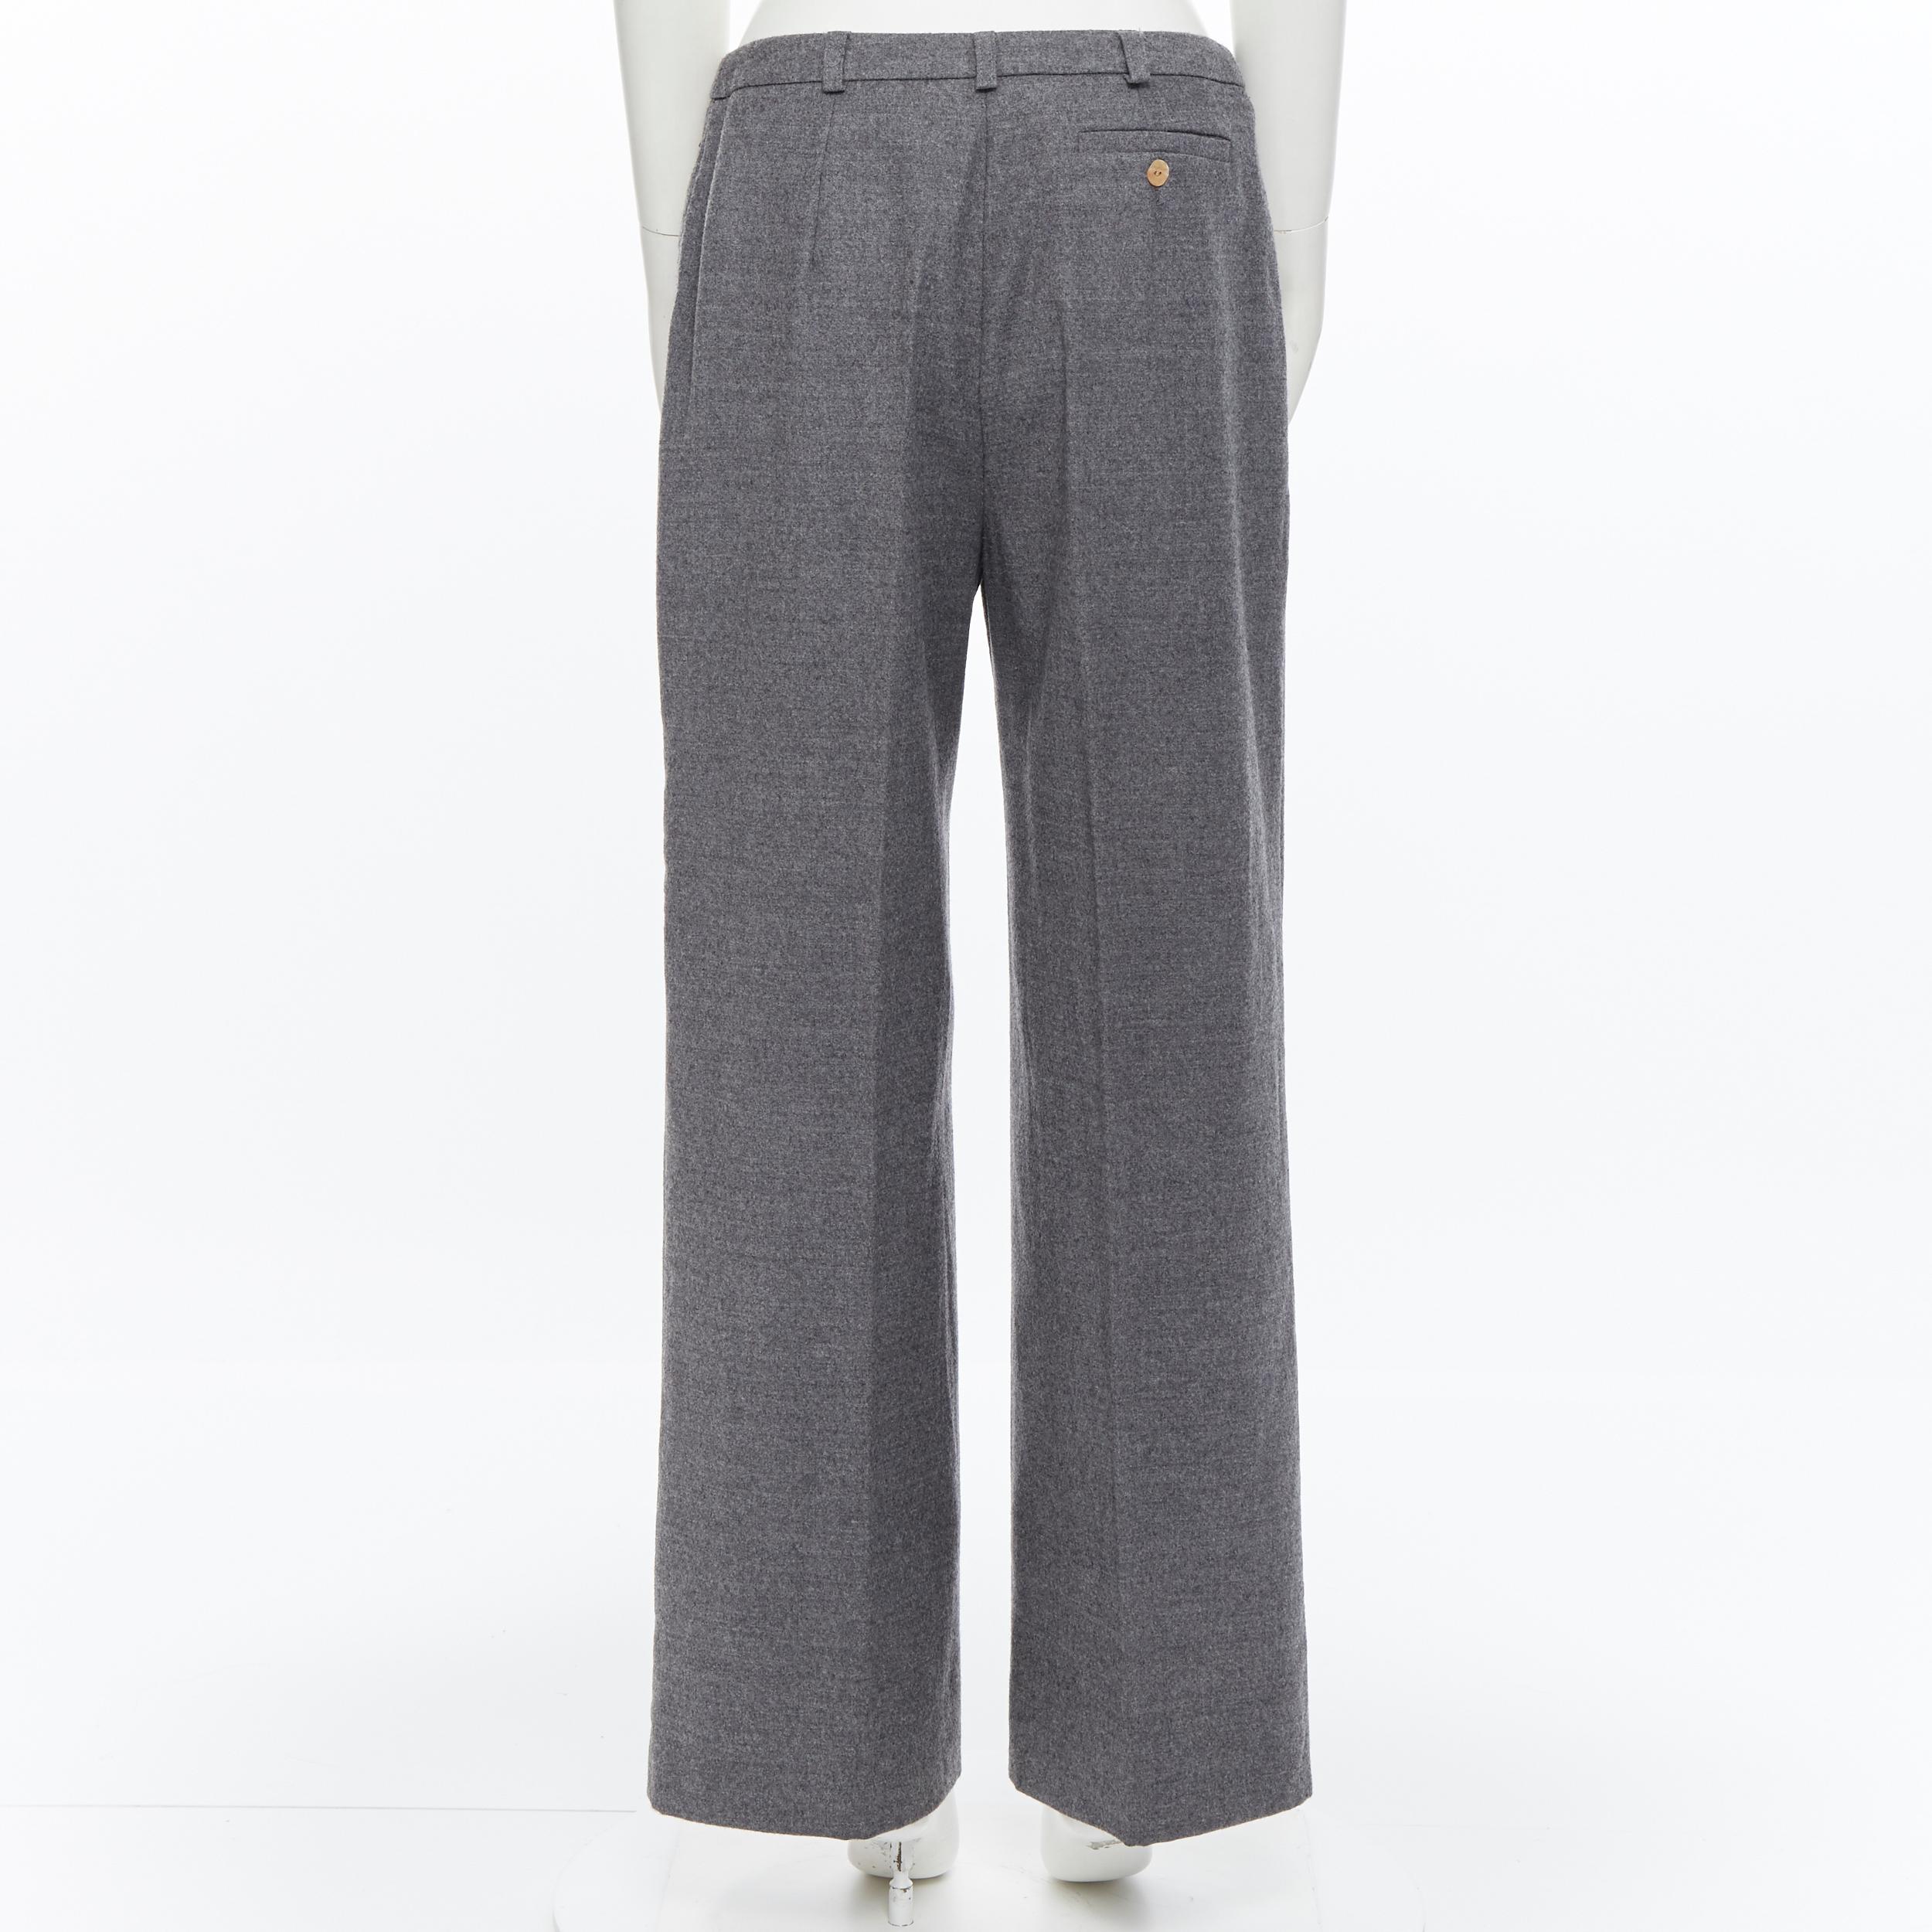 Women's SPORTMAX grey virgin wool blend concealed front pocket wide leg pants US12 29